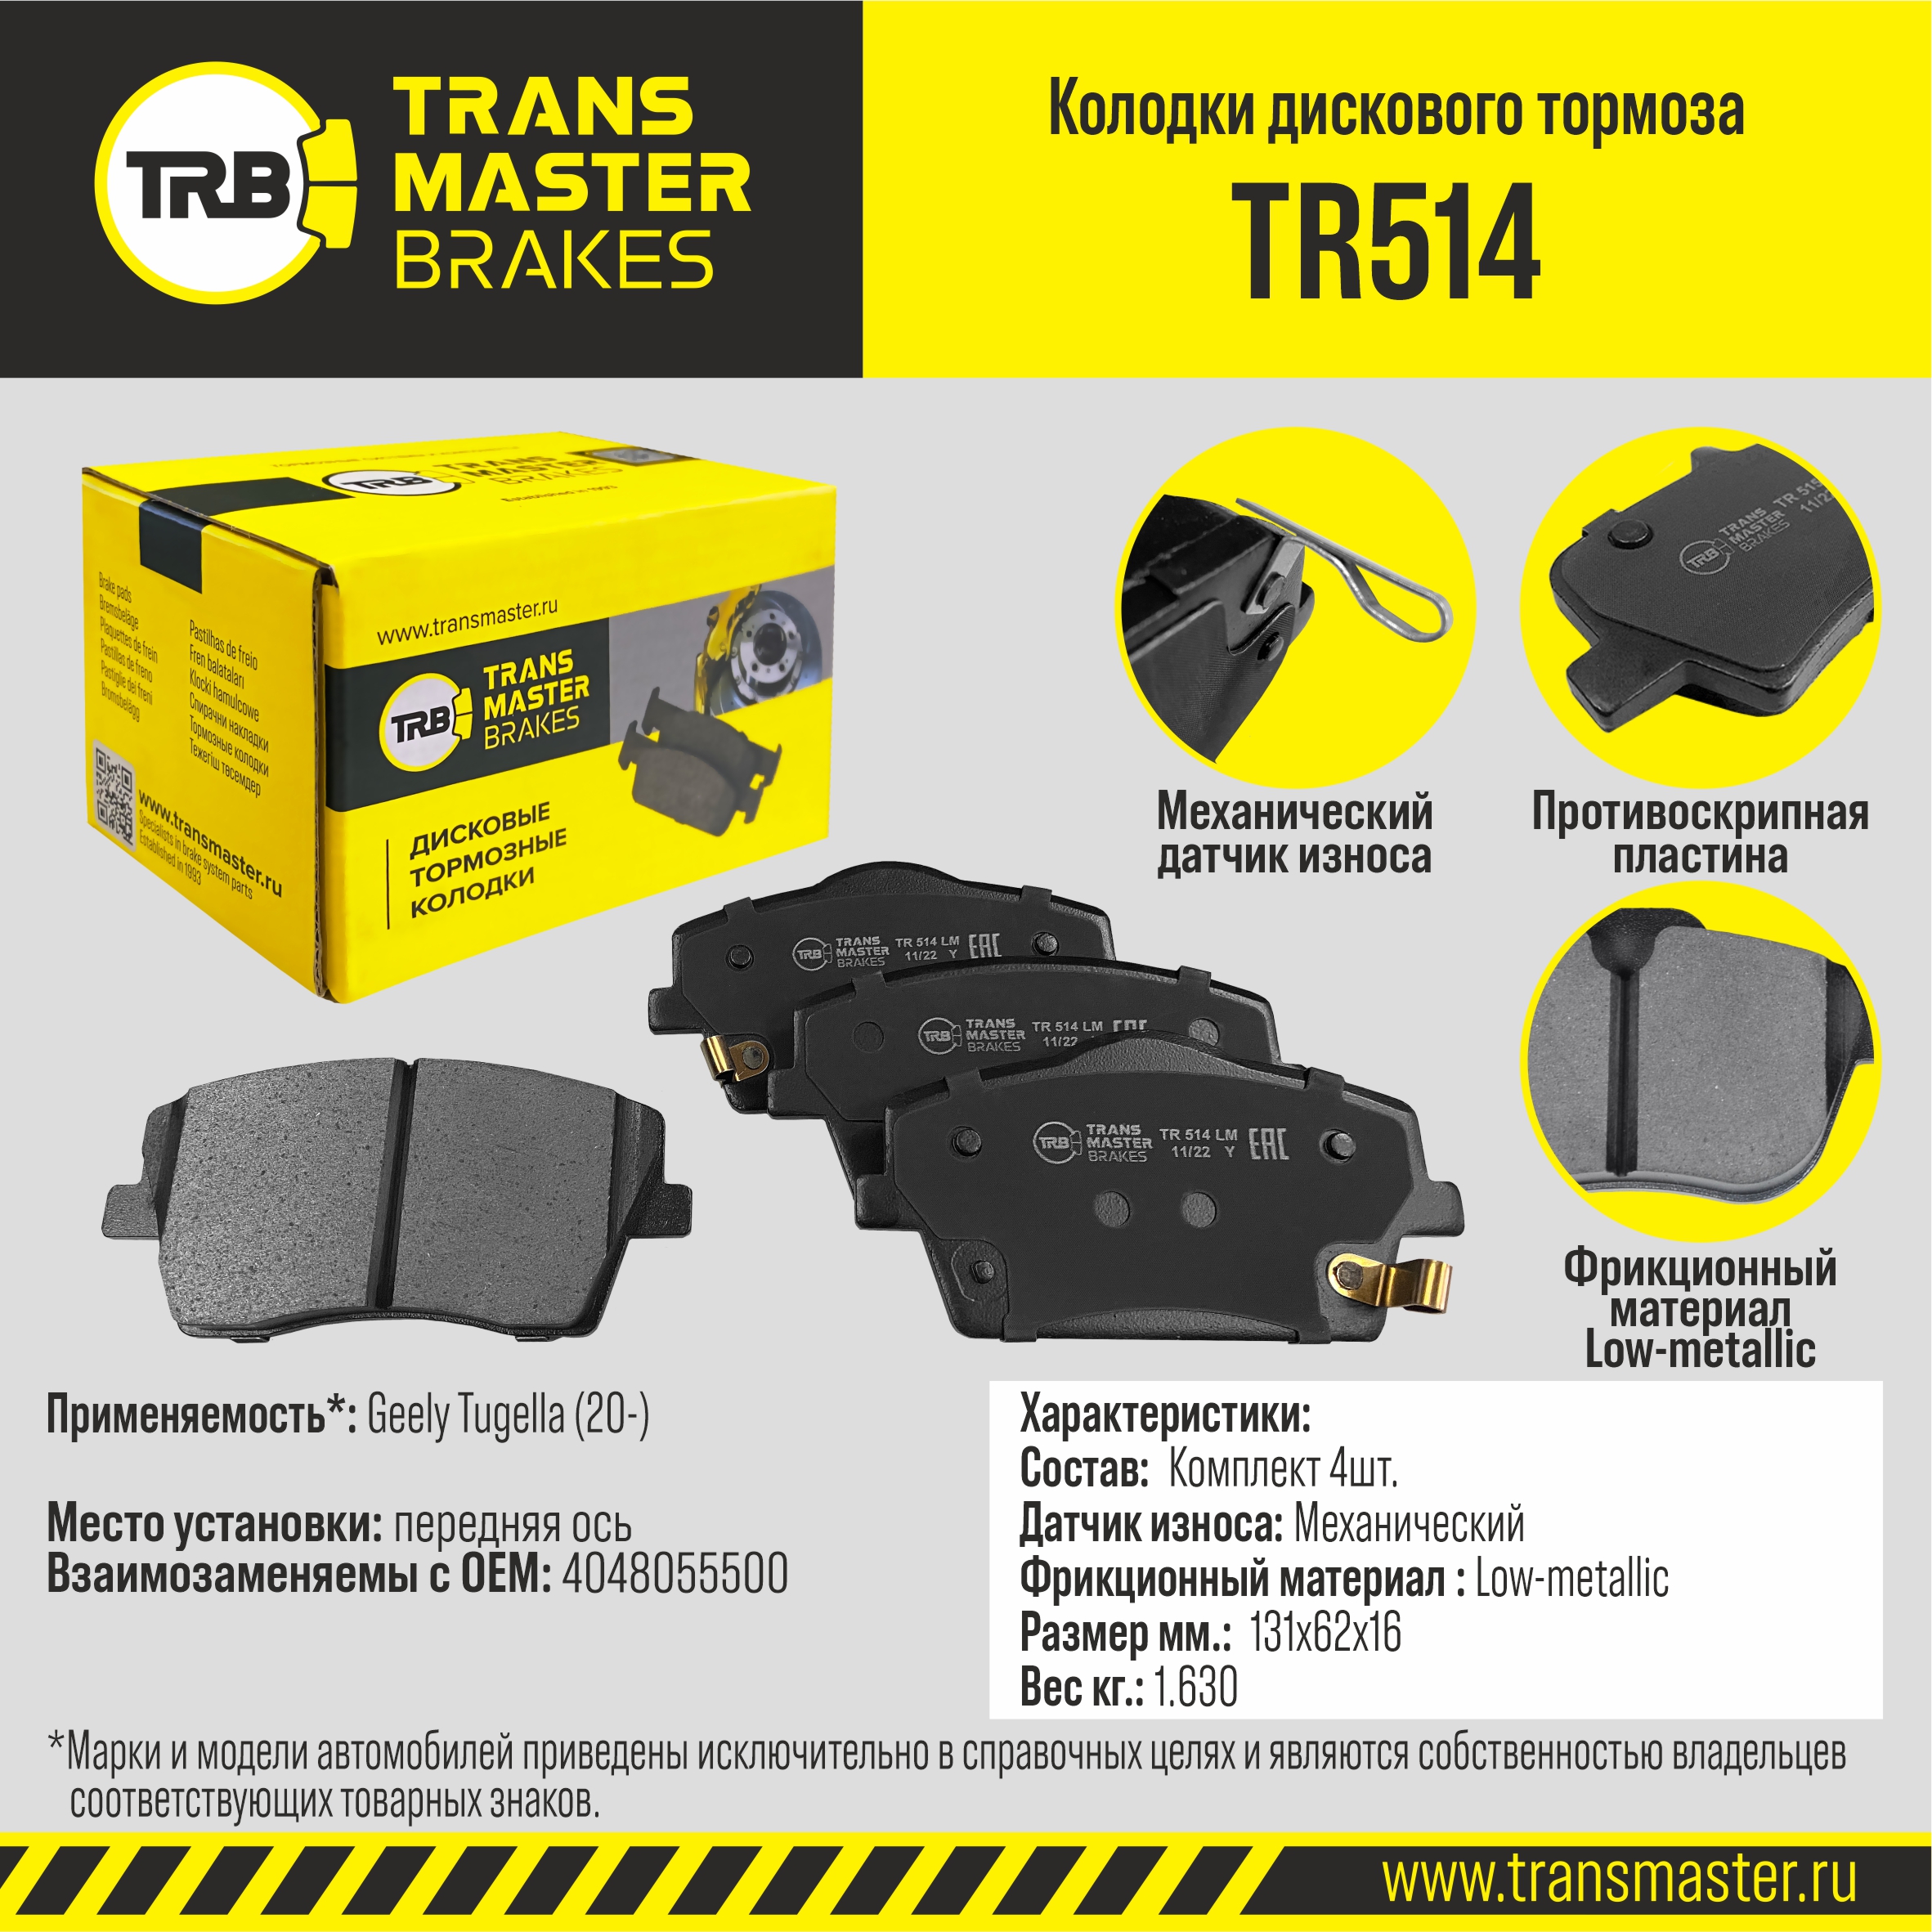 Колодки передние Geely Tugella (20-) TRANSMASTER TR514 TRANSMASTER TR514